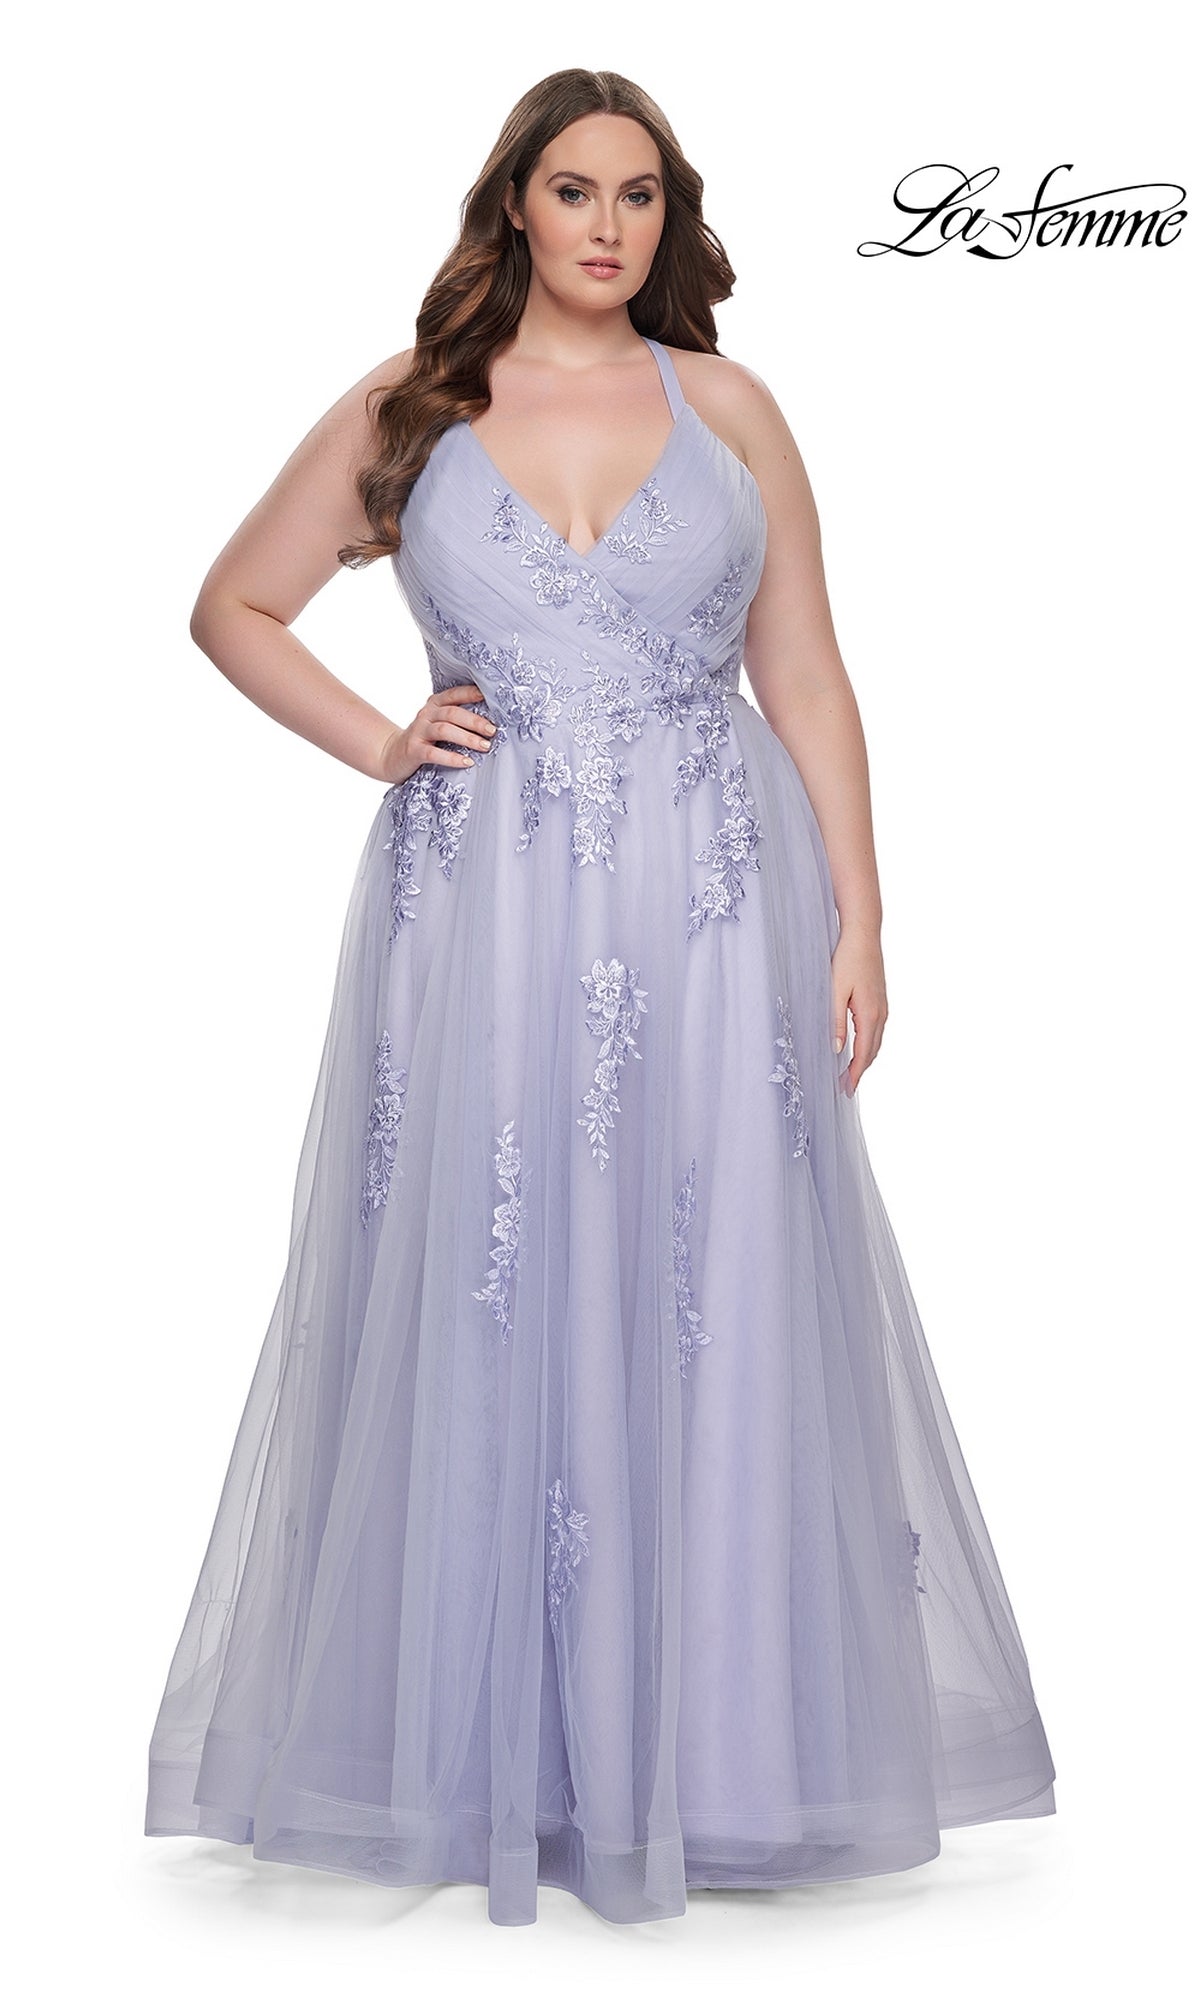  La Femme 29021 Formal Prom Dress